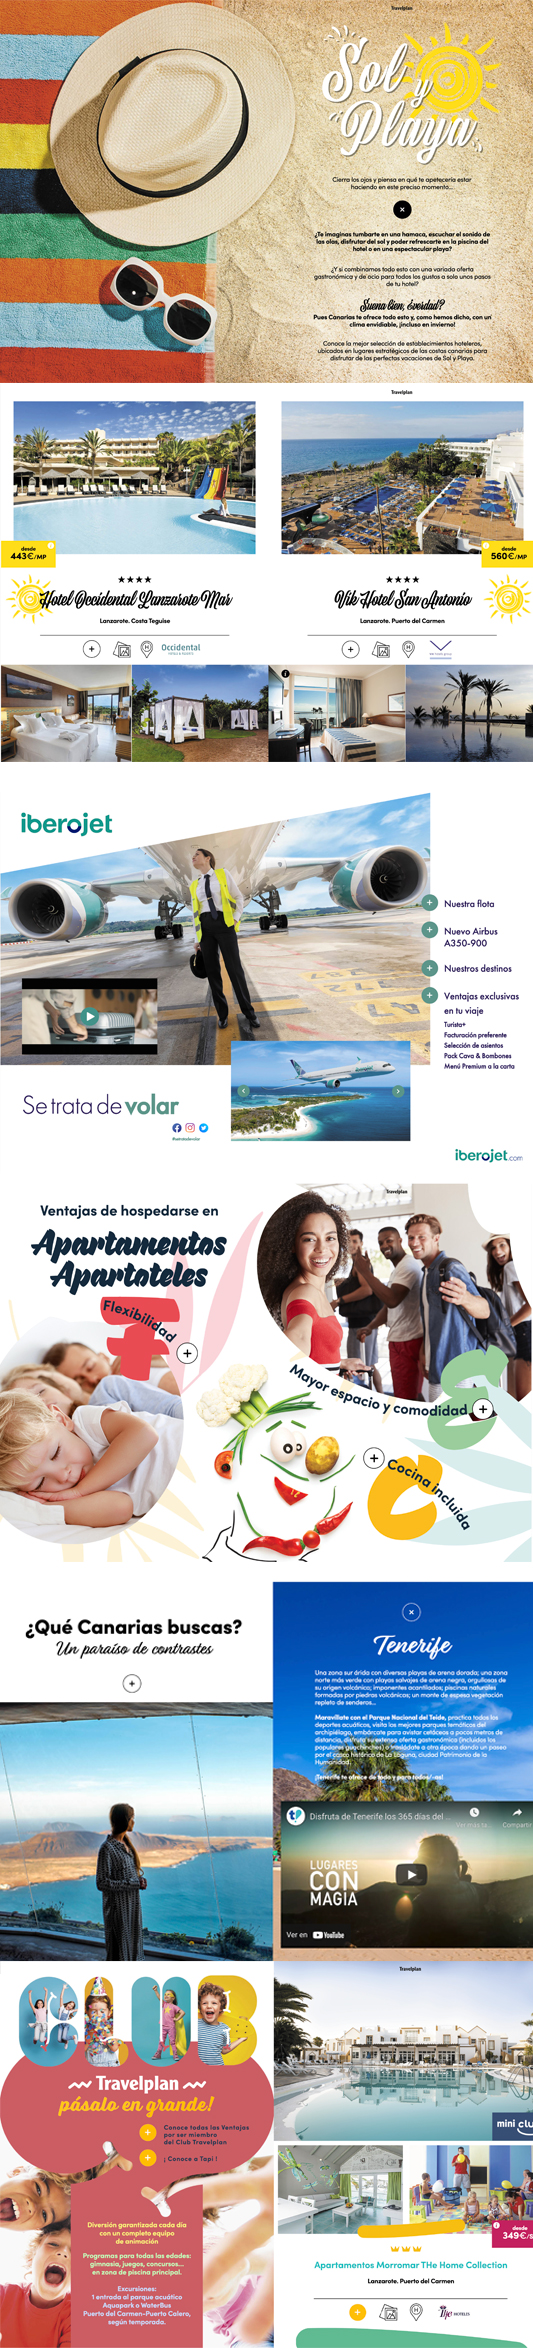 eMagazine Travelplan Canarias